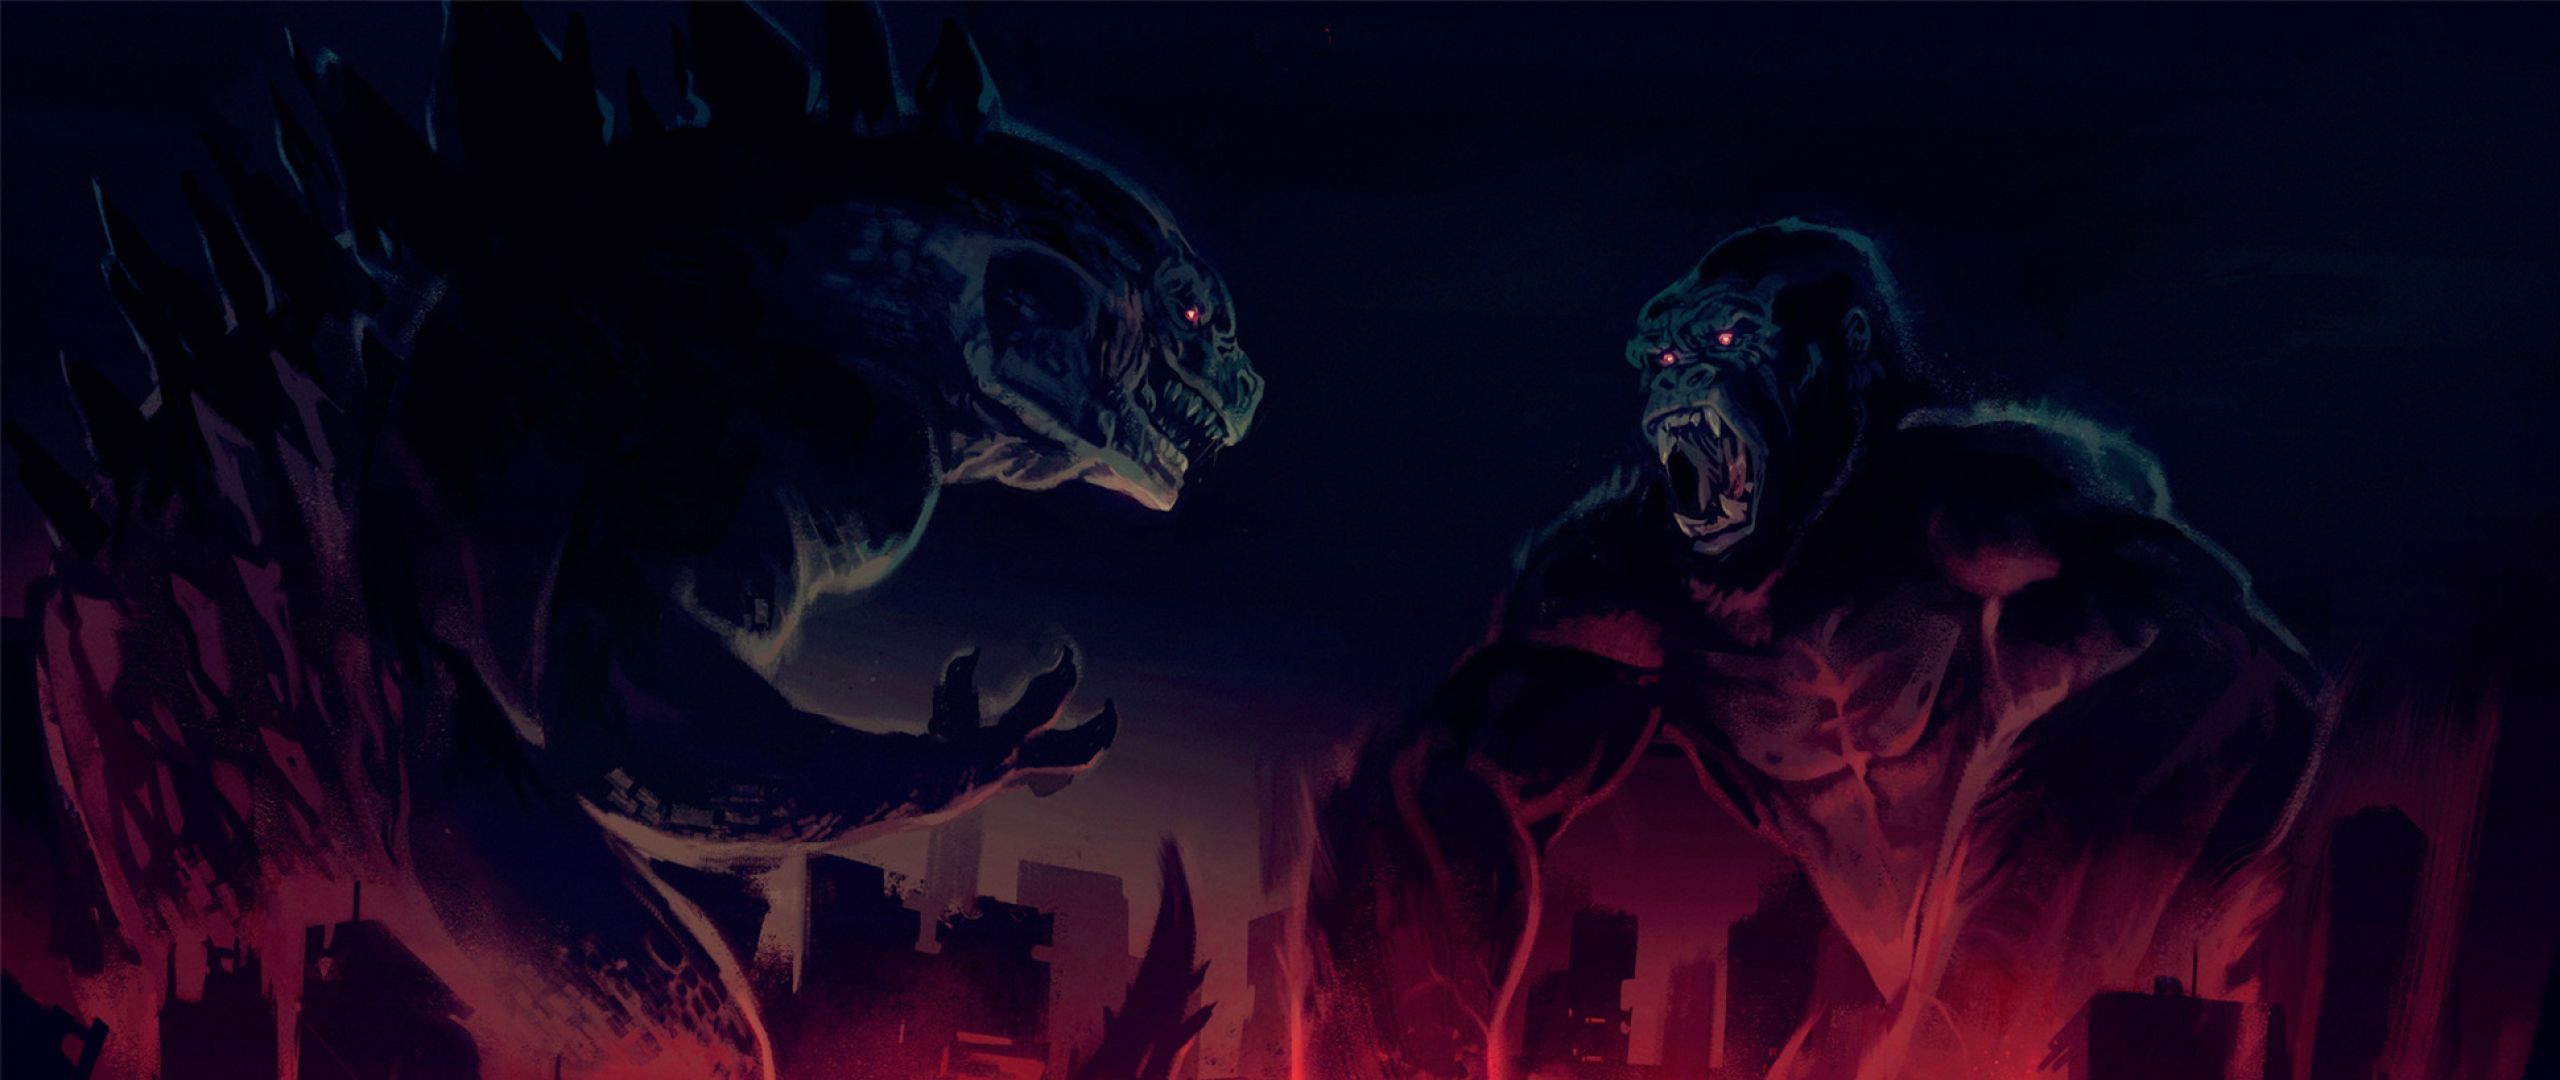 King Kong vs Godzilla Artwork 2560x1080 Resolution Wallpaper, HD Artist 4K Wallpaper, Image, Photo and Background